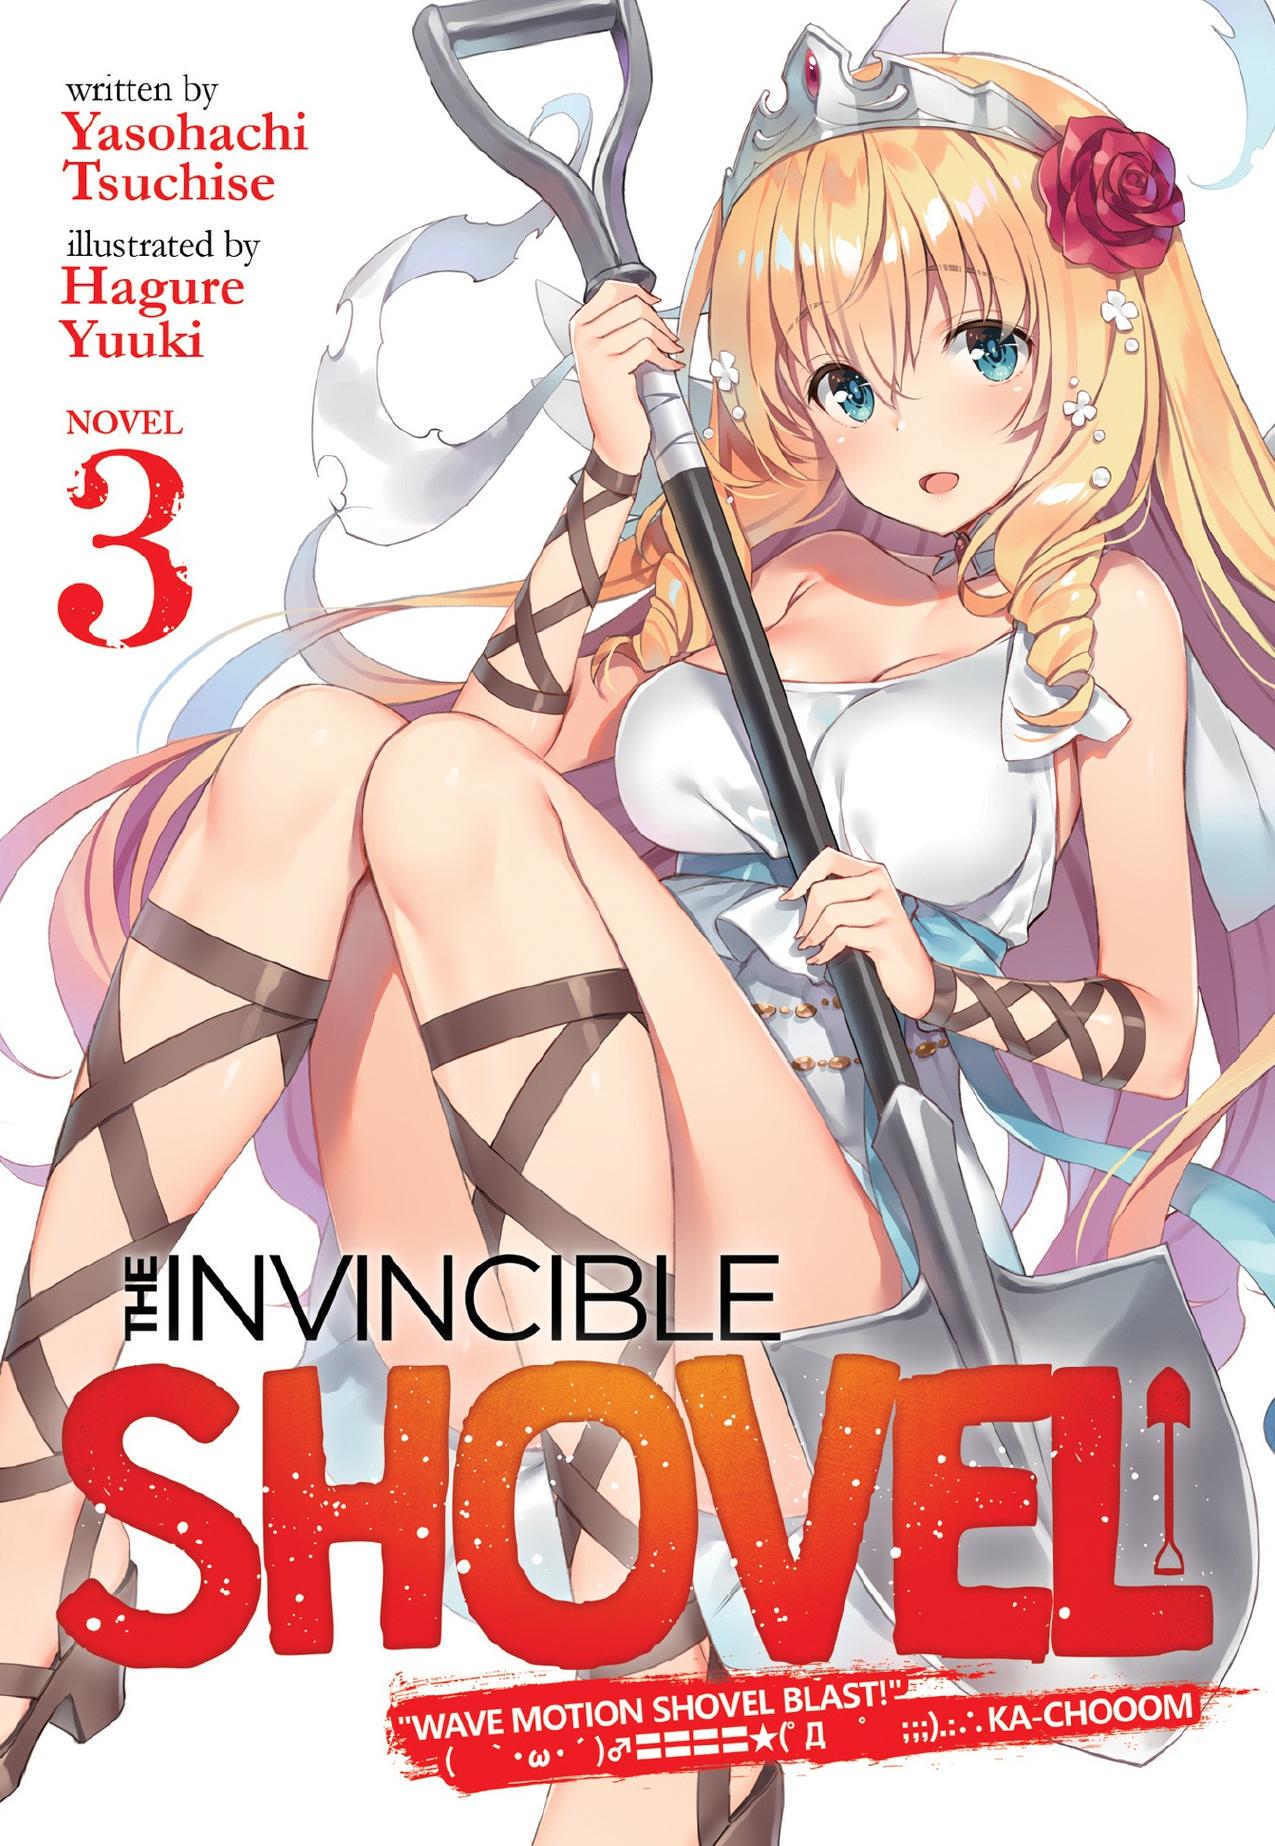 The Invincible Shovel (Light Novel) Vol. 3 by Yasohachi Tsuchise